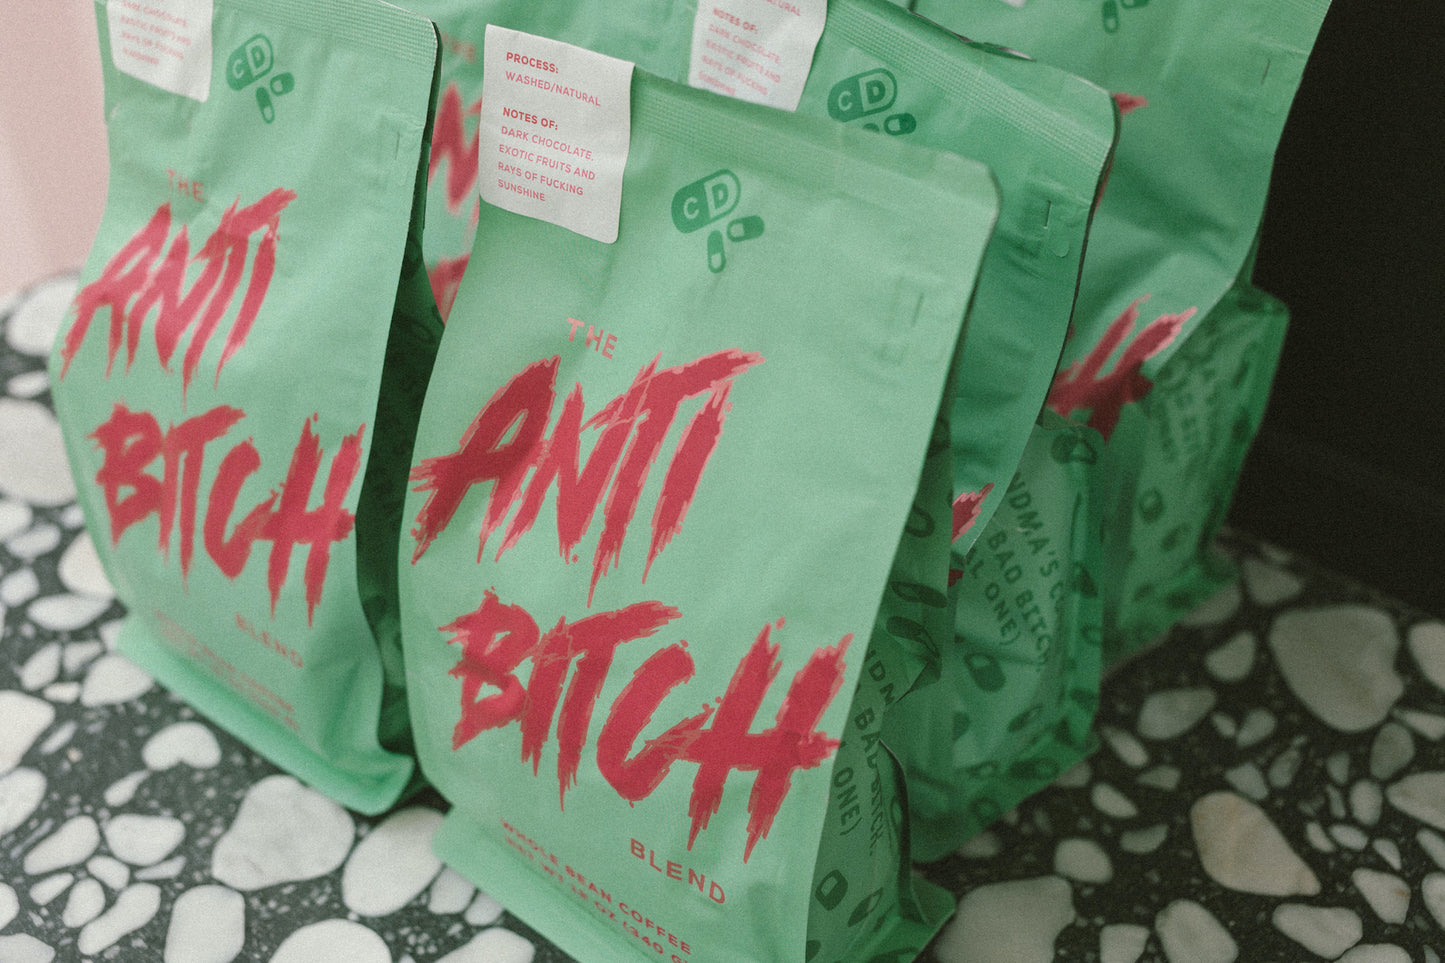 Anti B*tch Blend Coffee